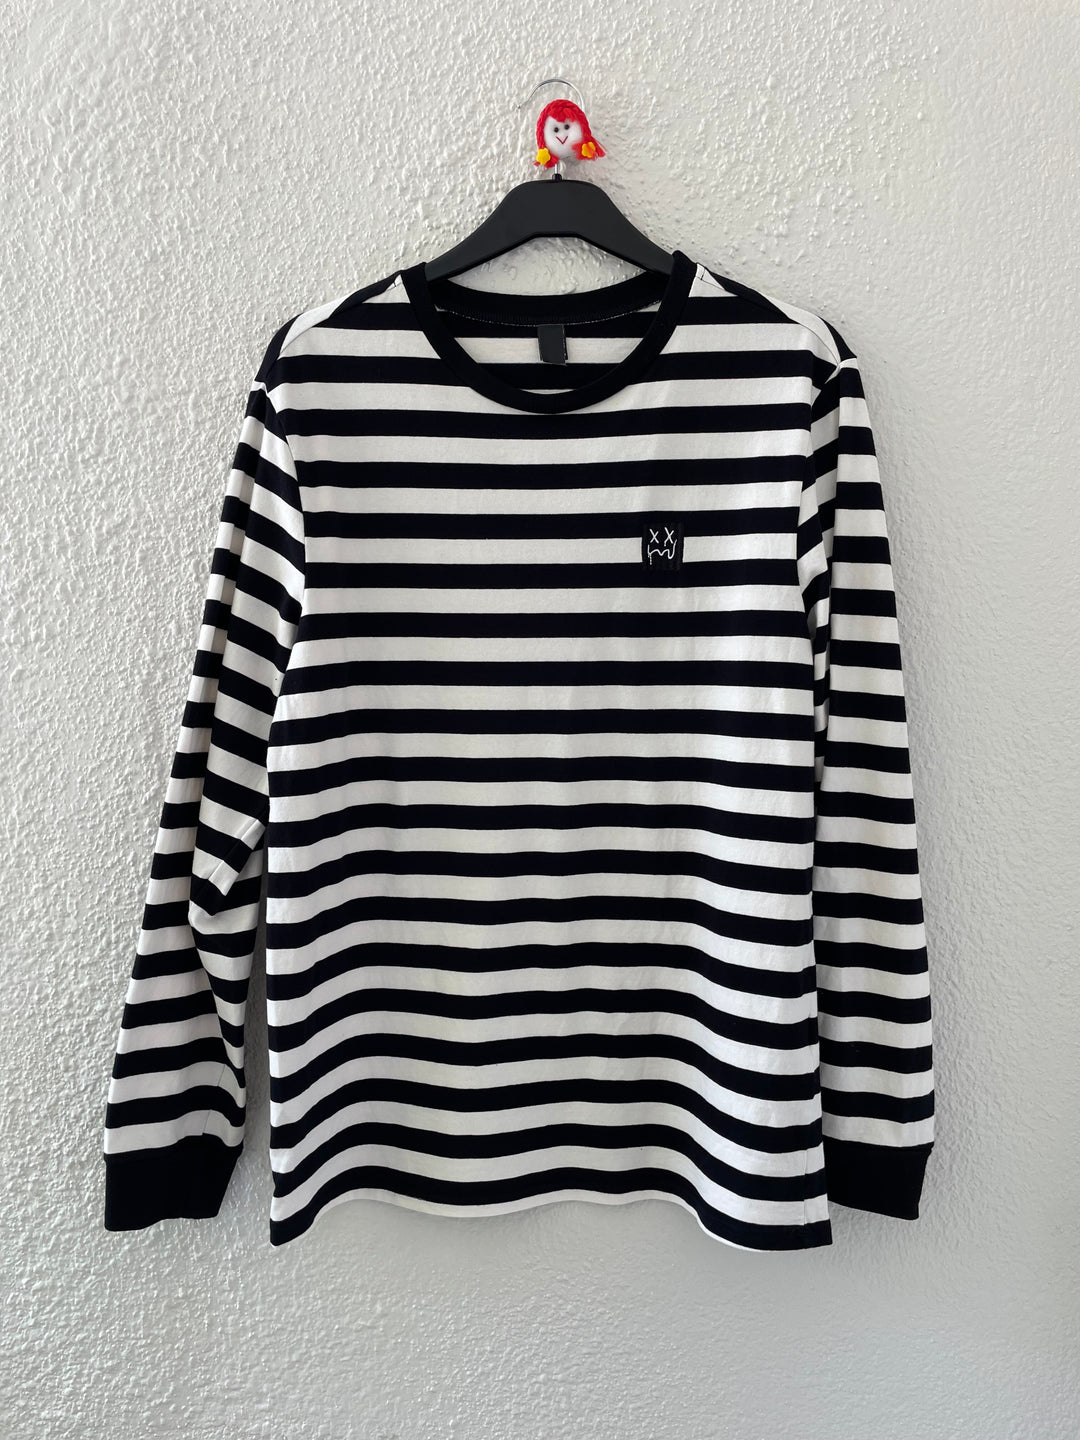 Image of Black&White Striped L/S top